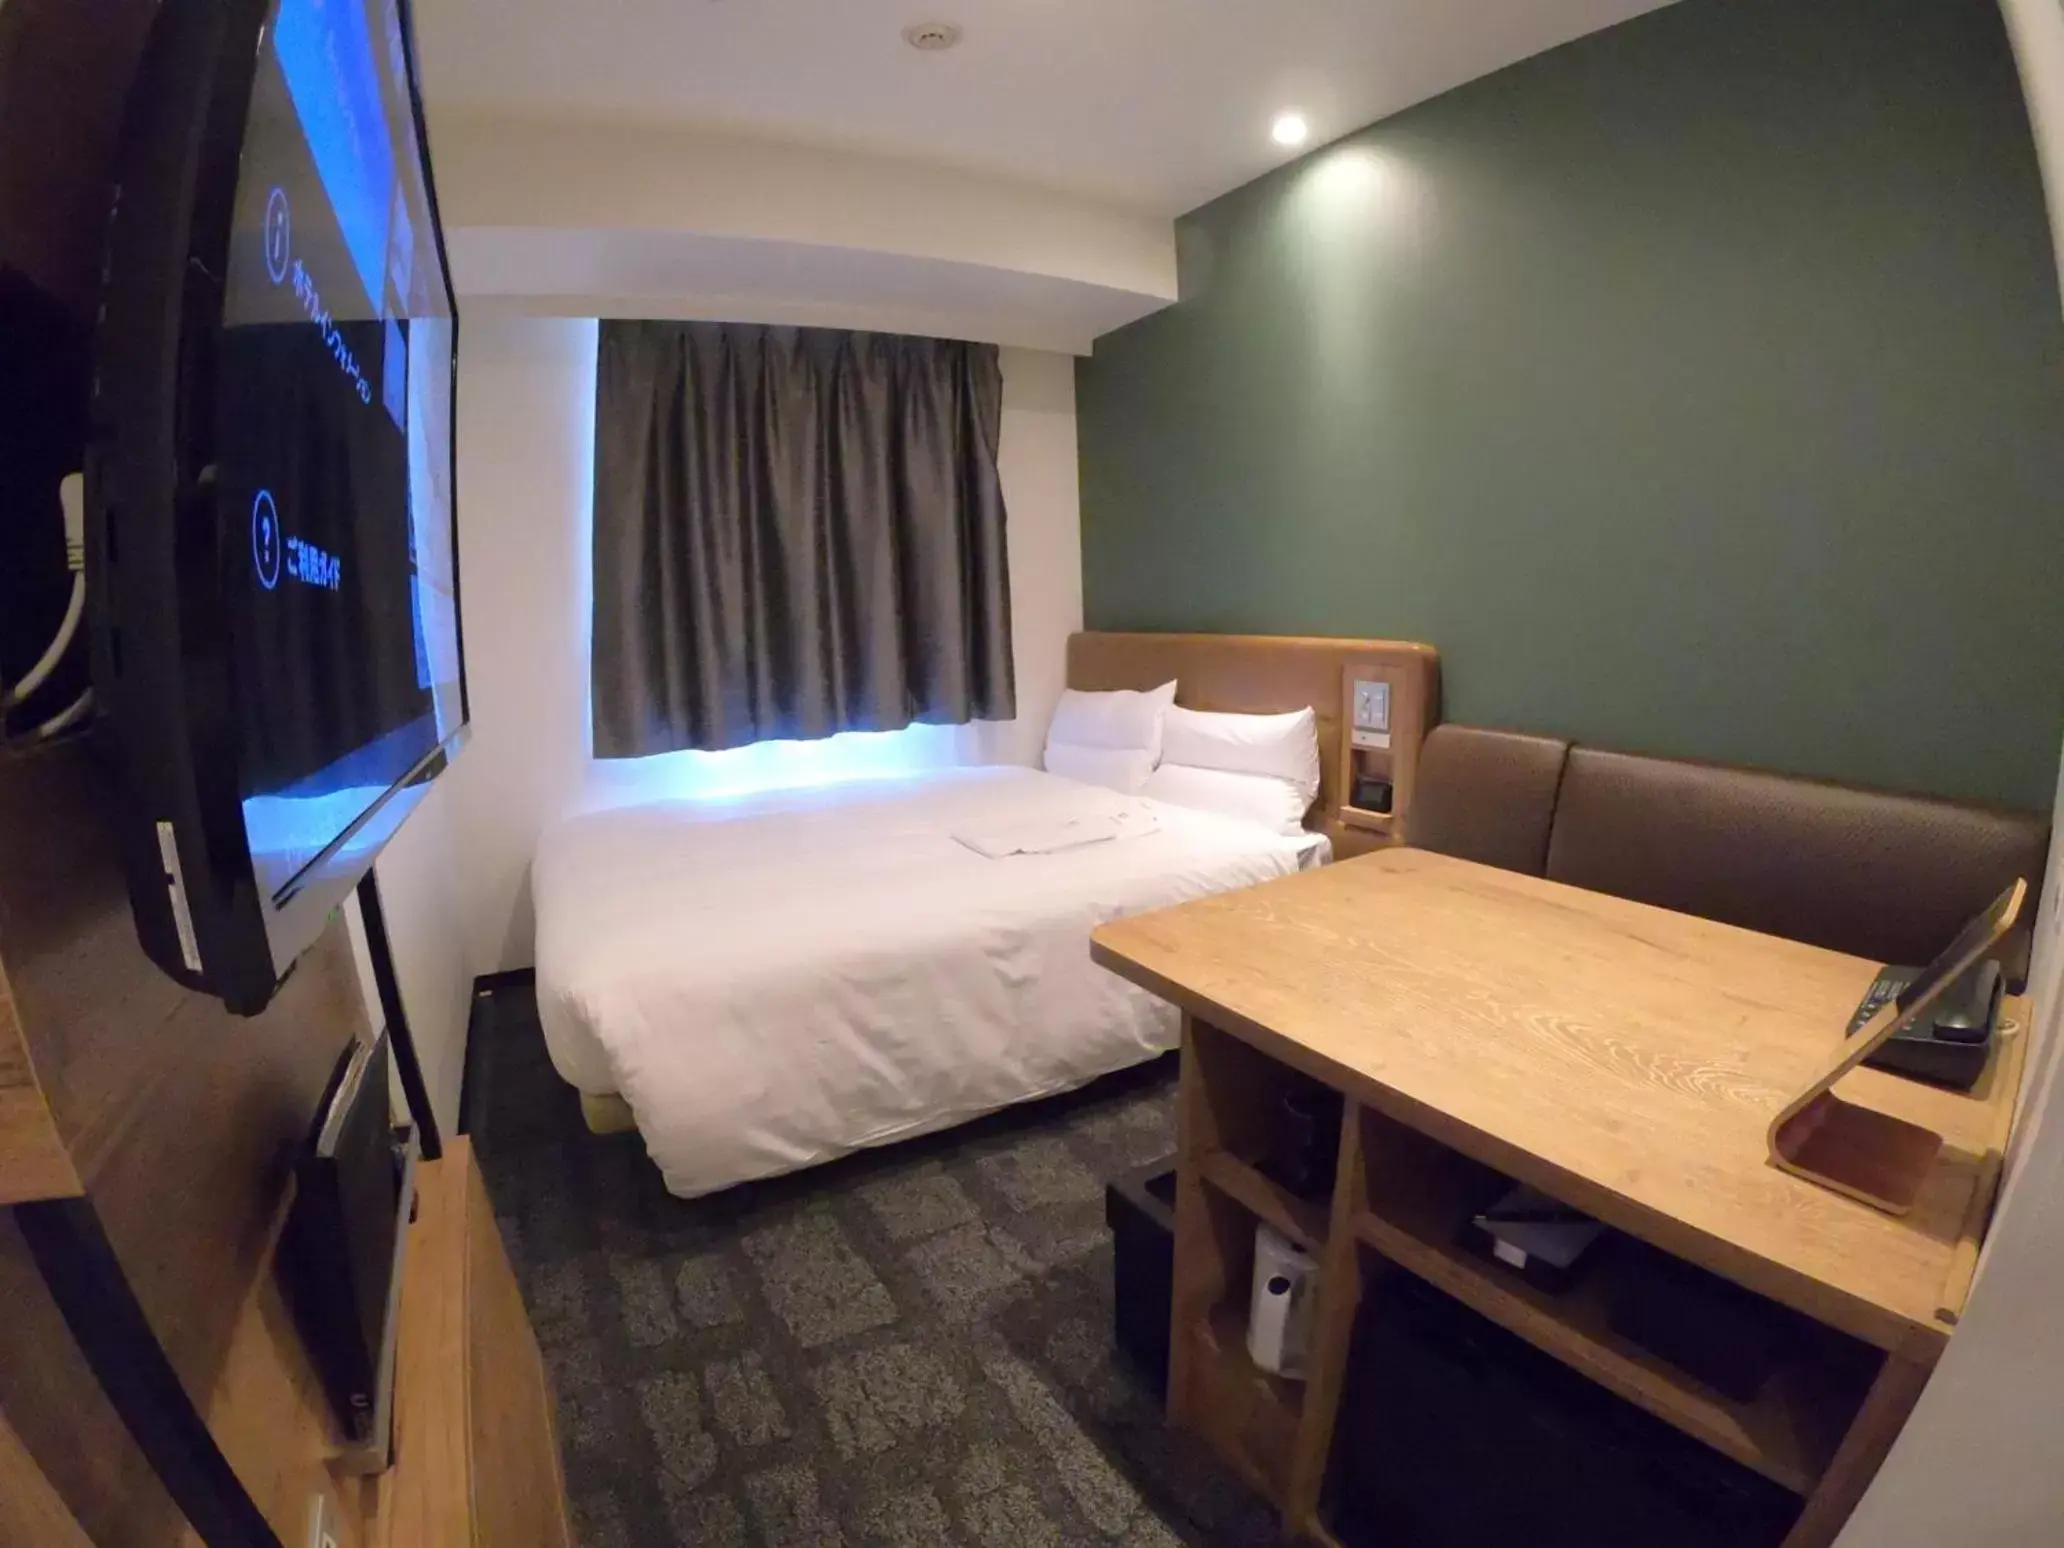 Bedroom, Bed in Via Inn Shinsaibashi